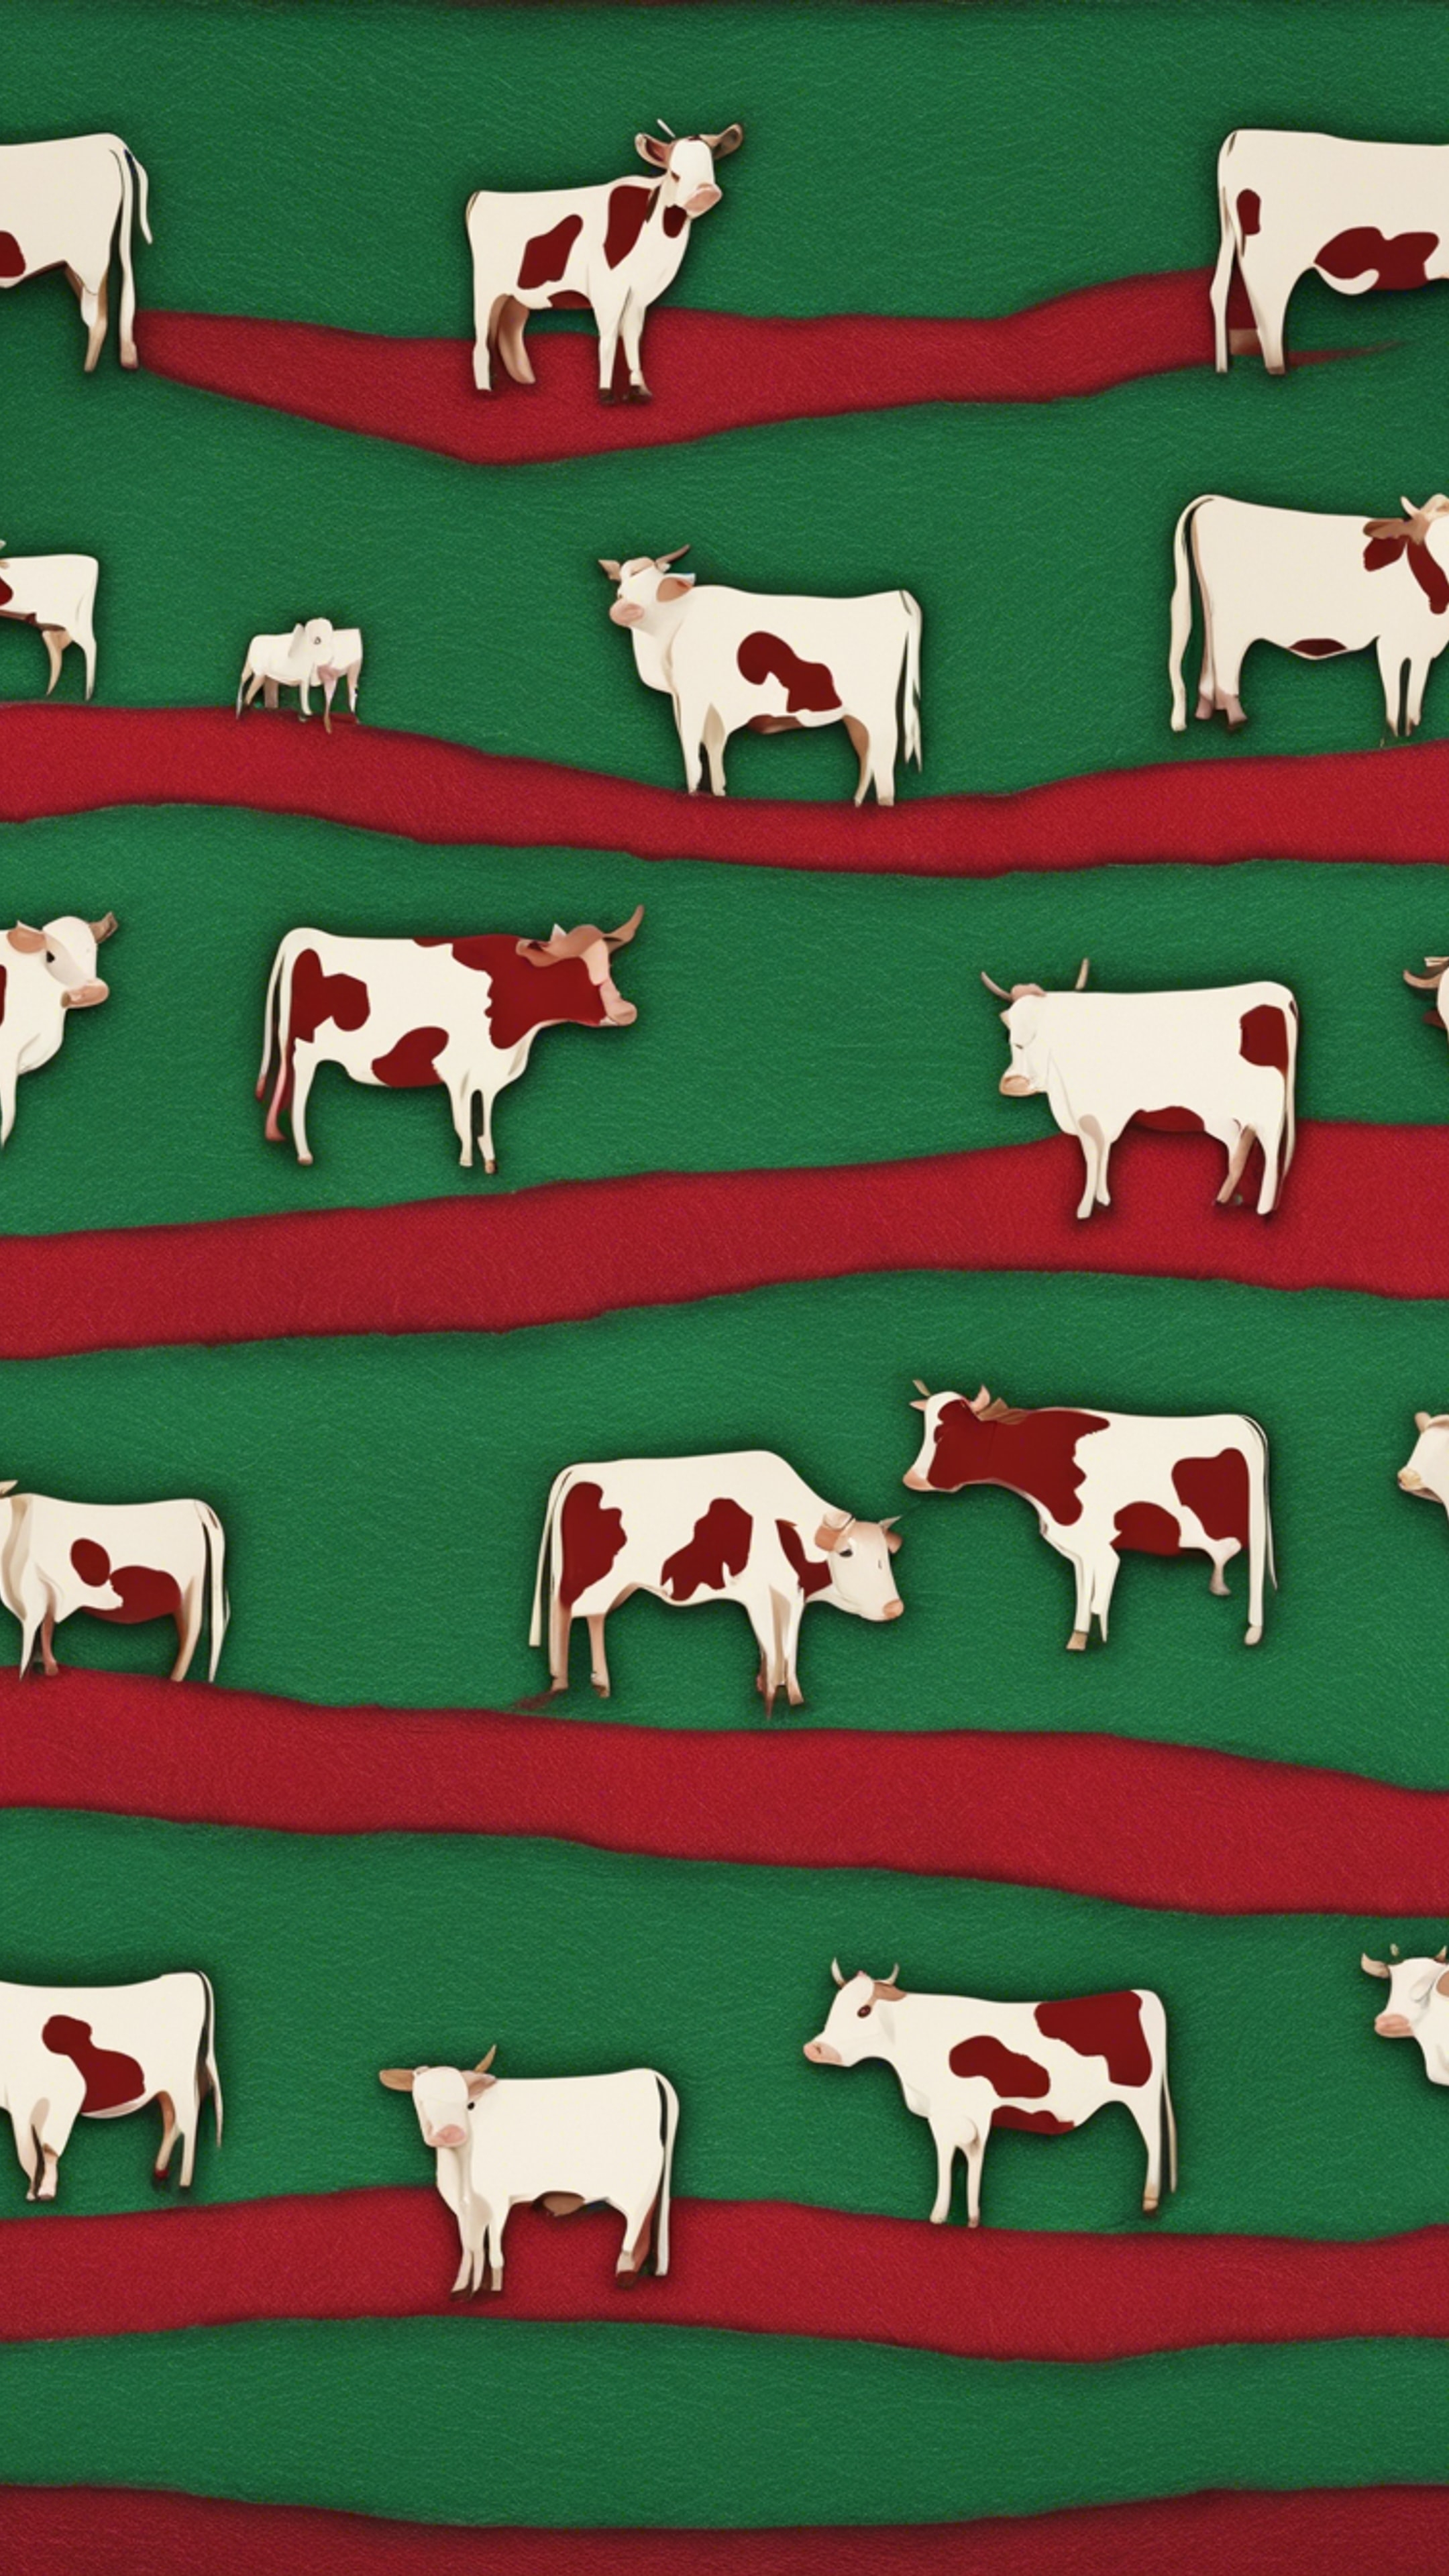 Unique cow hide design in a red and green palette. Fond d'écran[1a00f9f5e2494c7ea6d8]